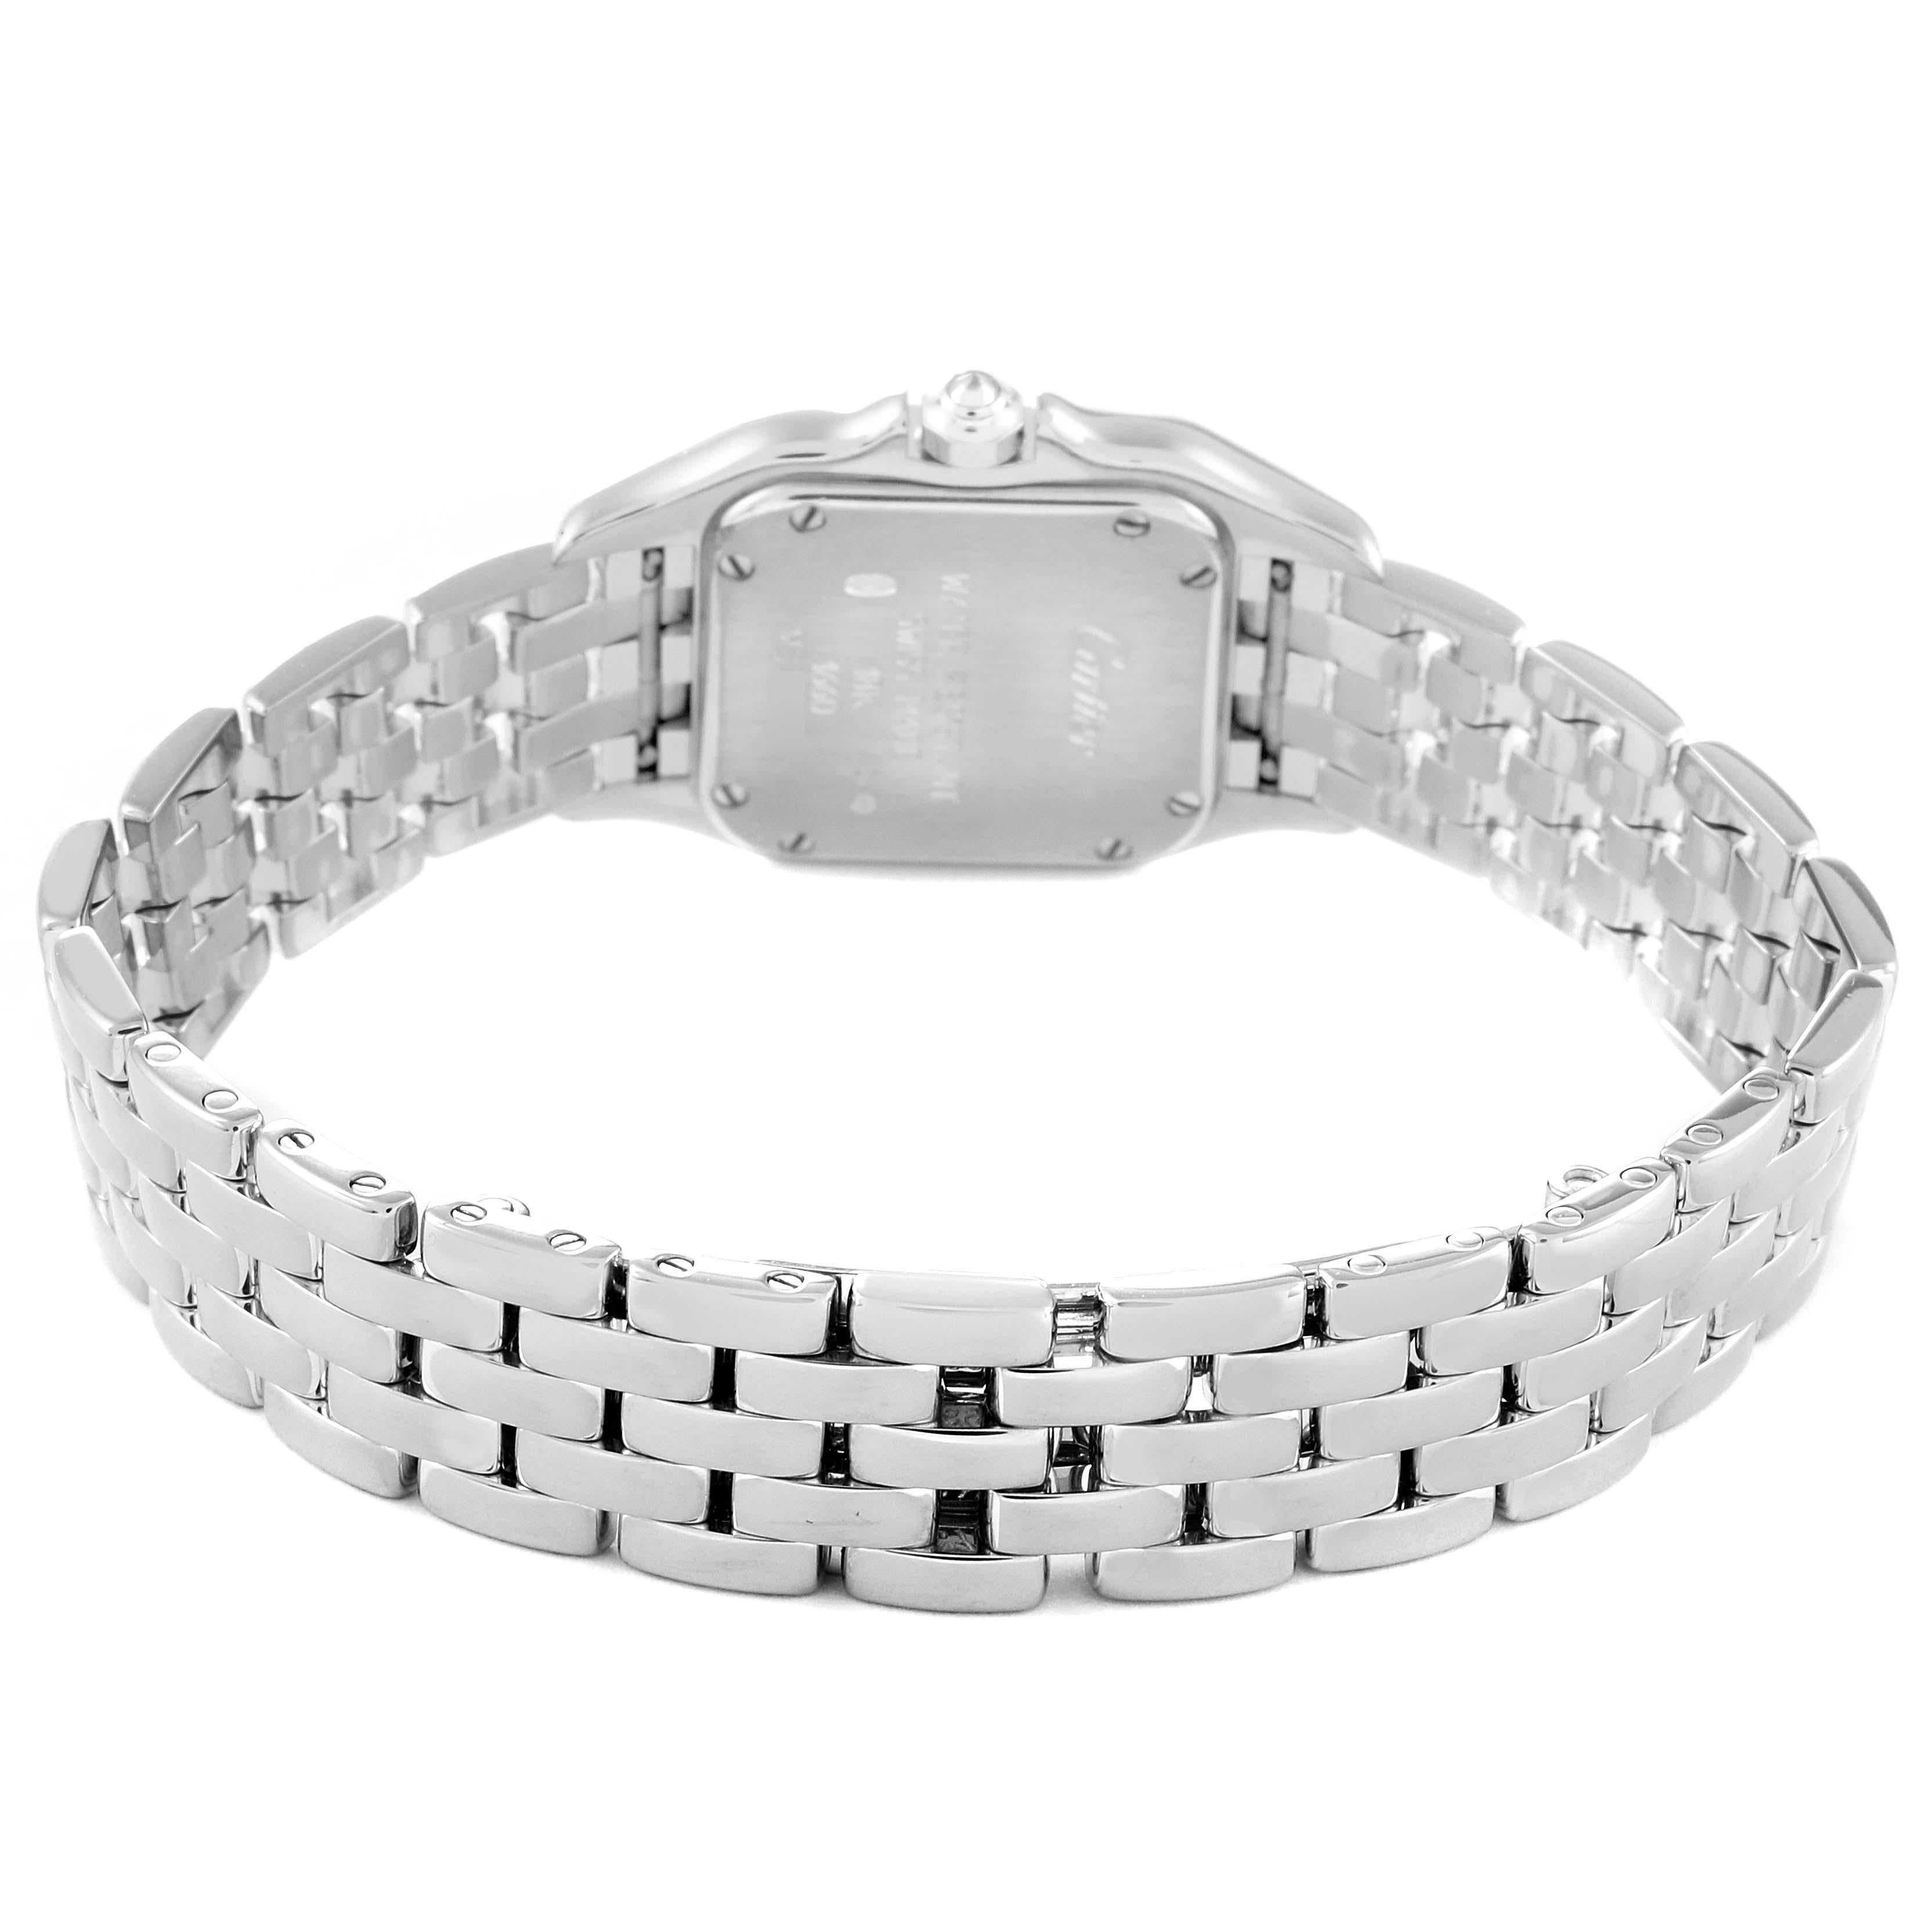 Cartier Panthere White Gold Diamond Bezel Ladies Watch WF3091F3 1